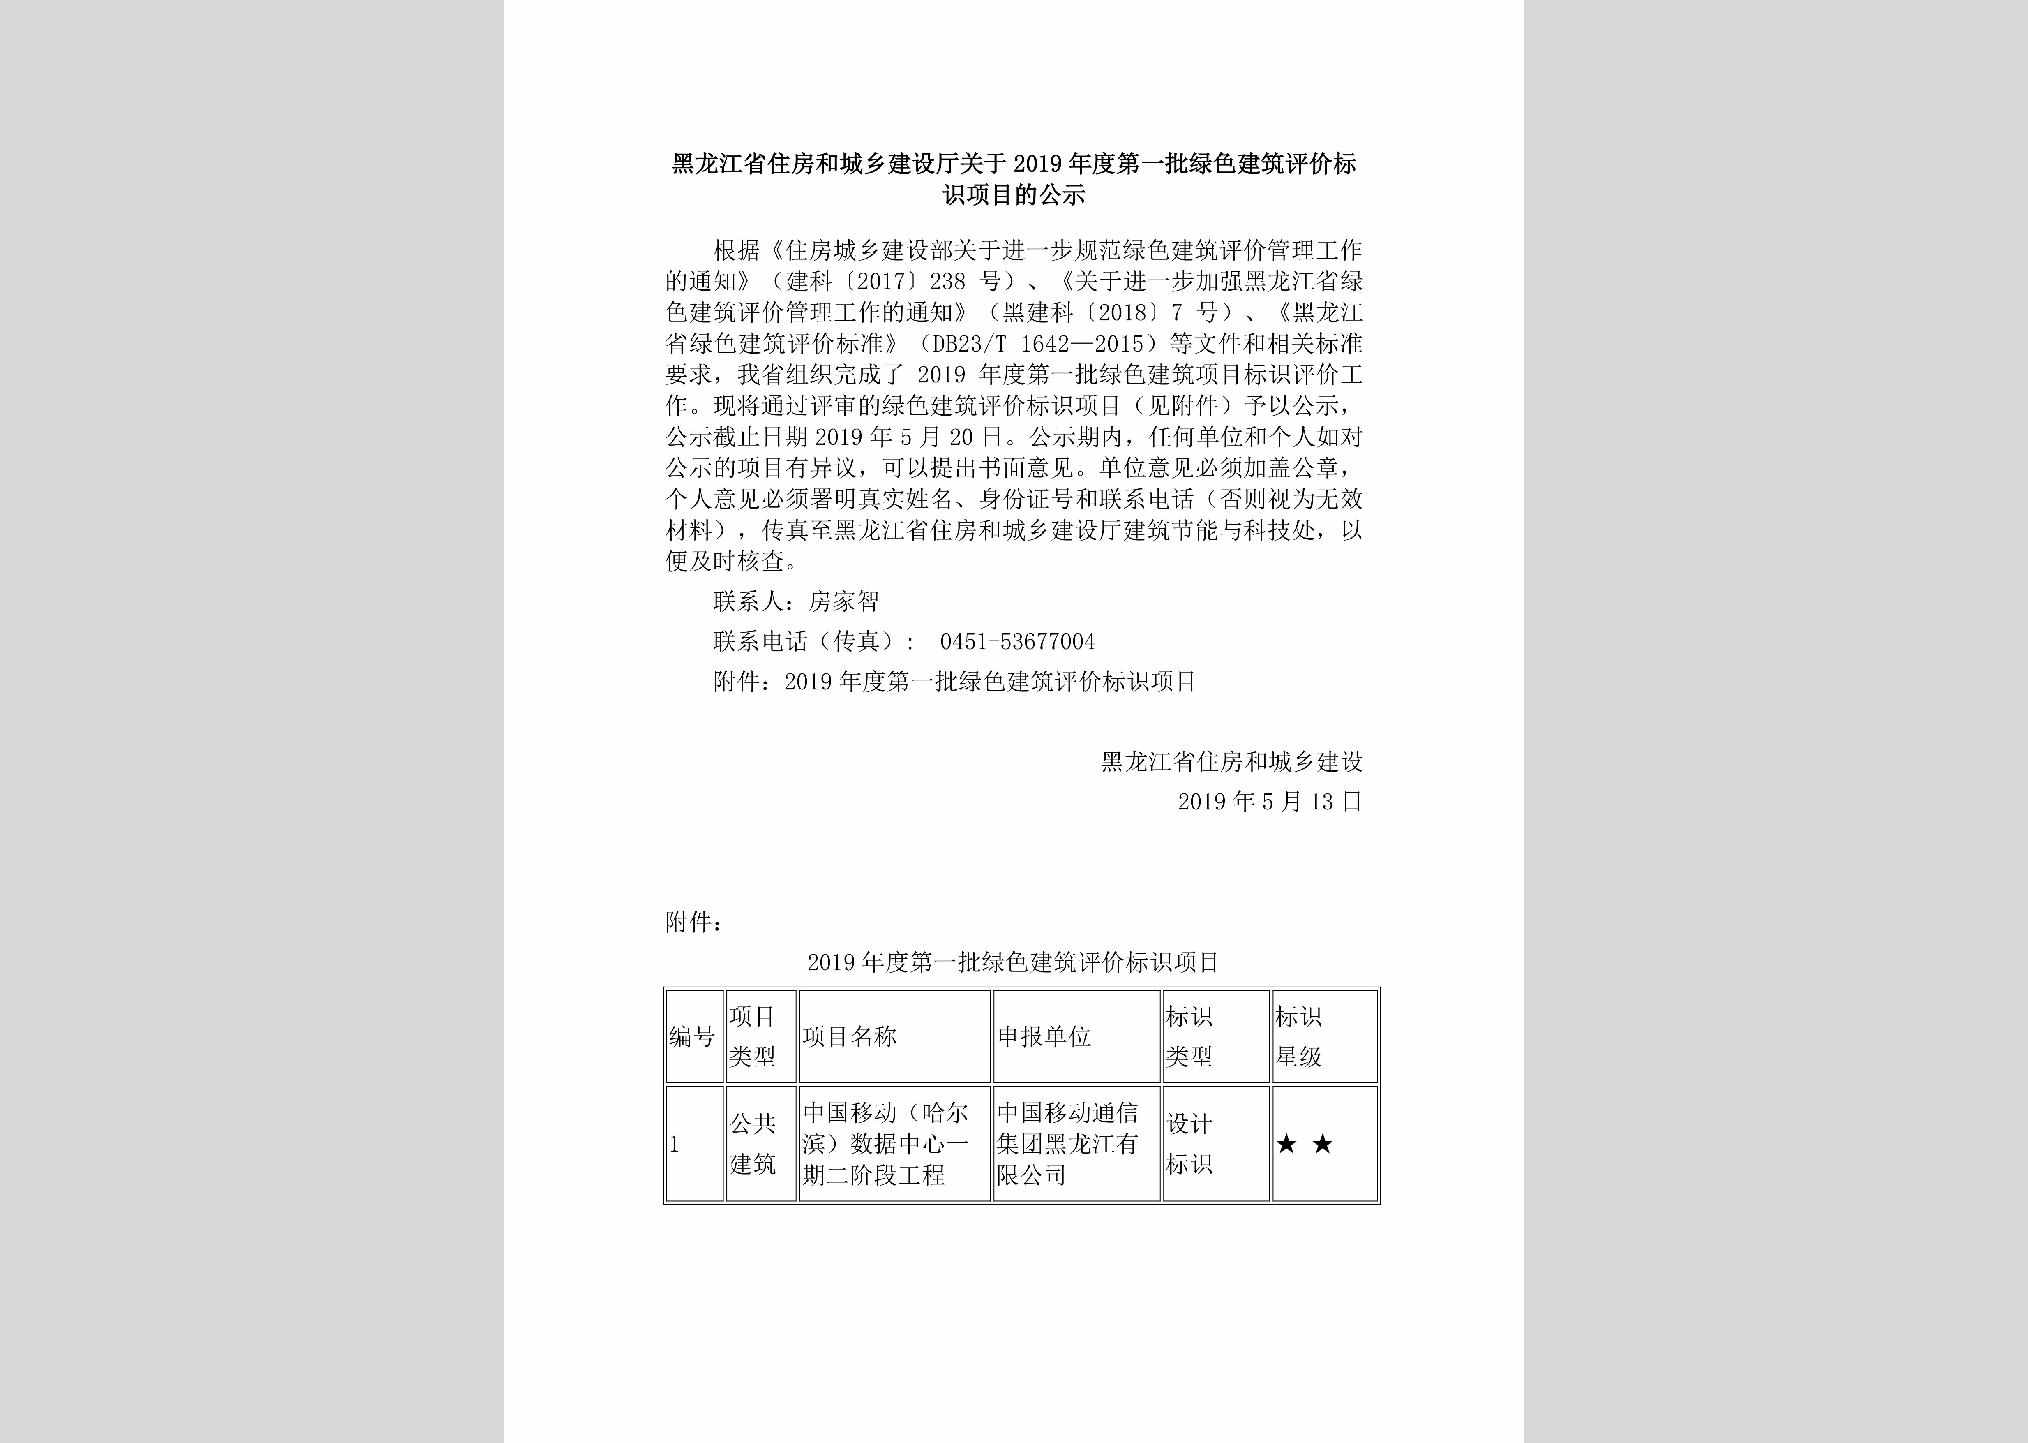 HLJ-NDDYPLSJ-2019：黑龙江省住房和城乡建设厅关于2019年度第一批绿色建筑评价标识项目的公示